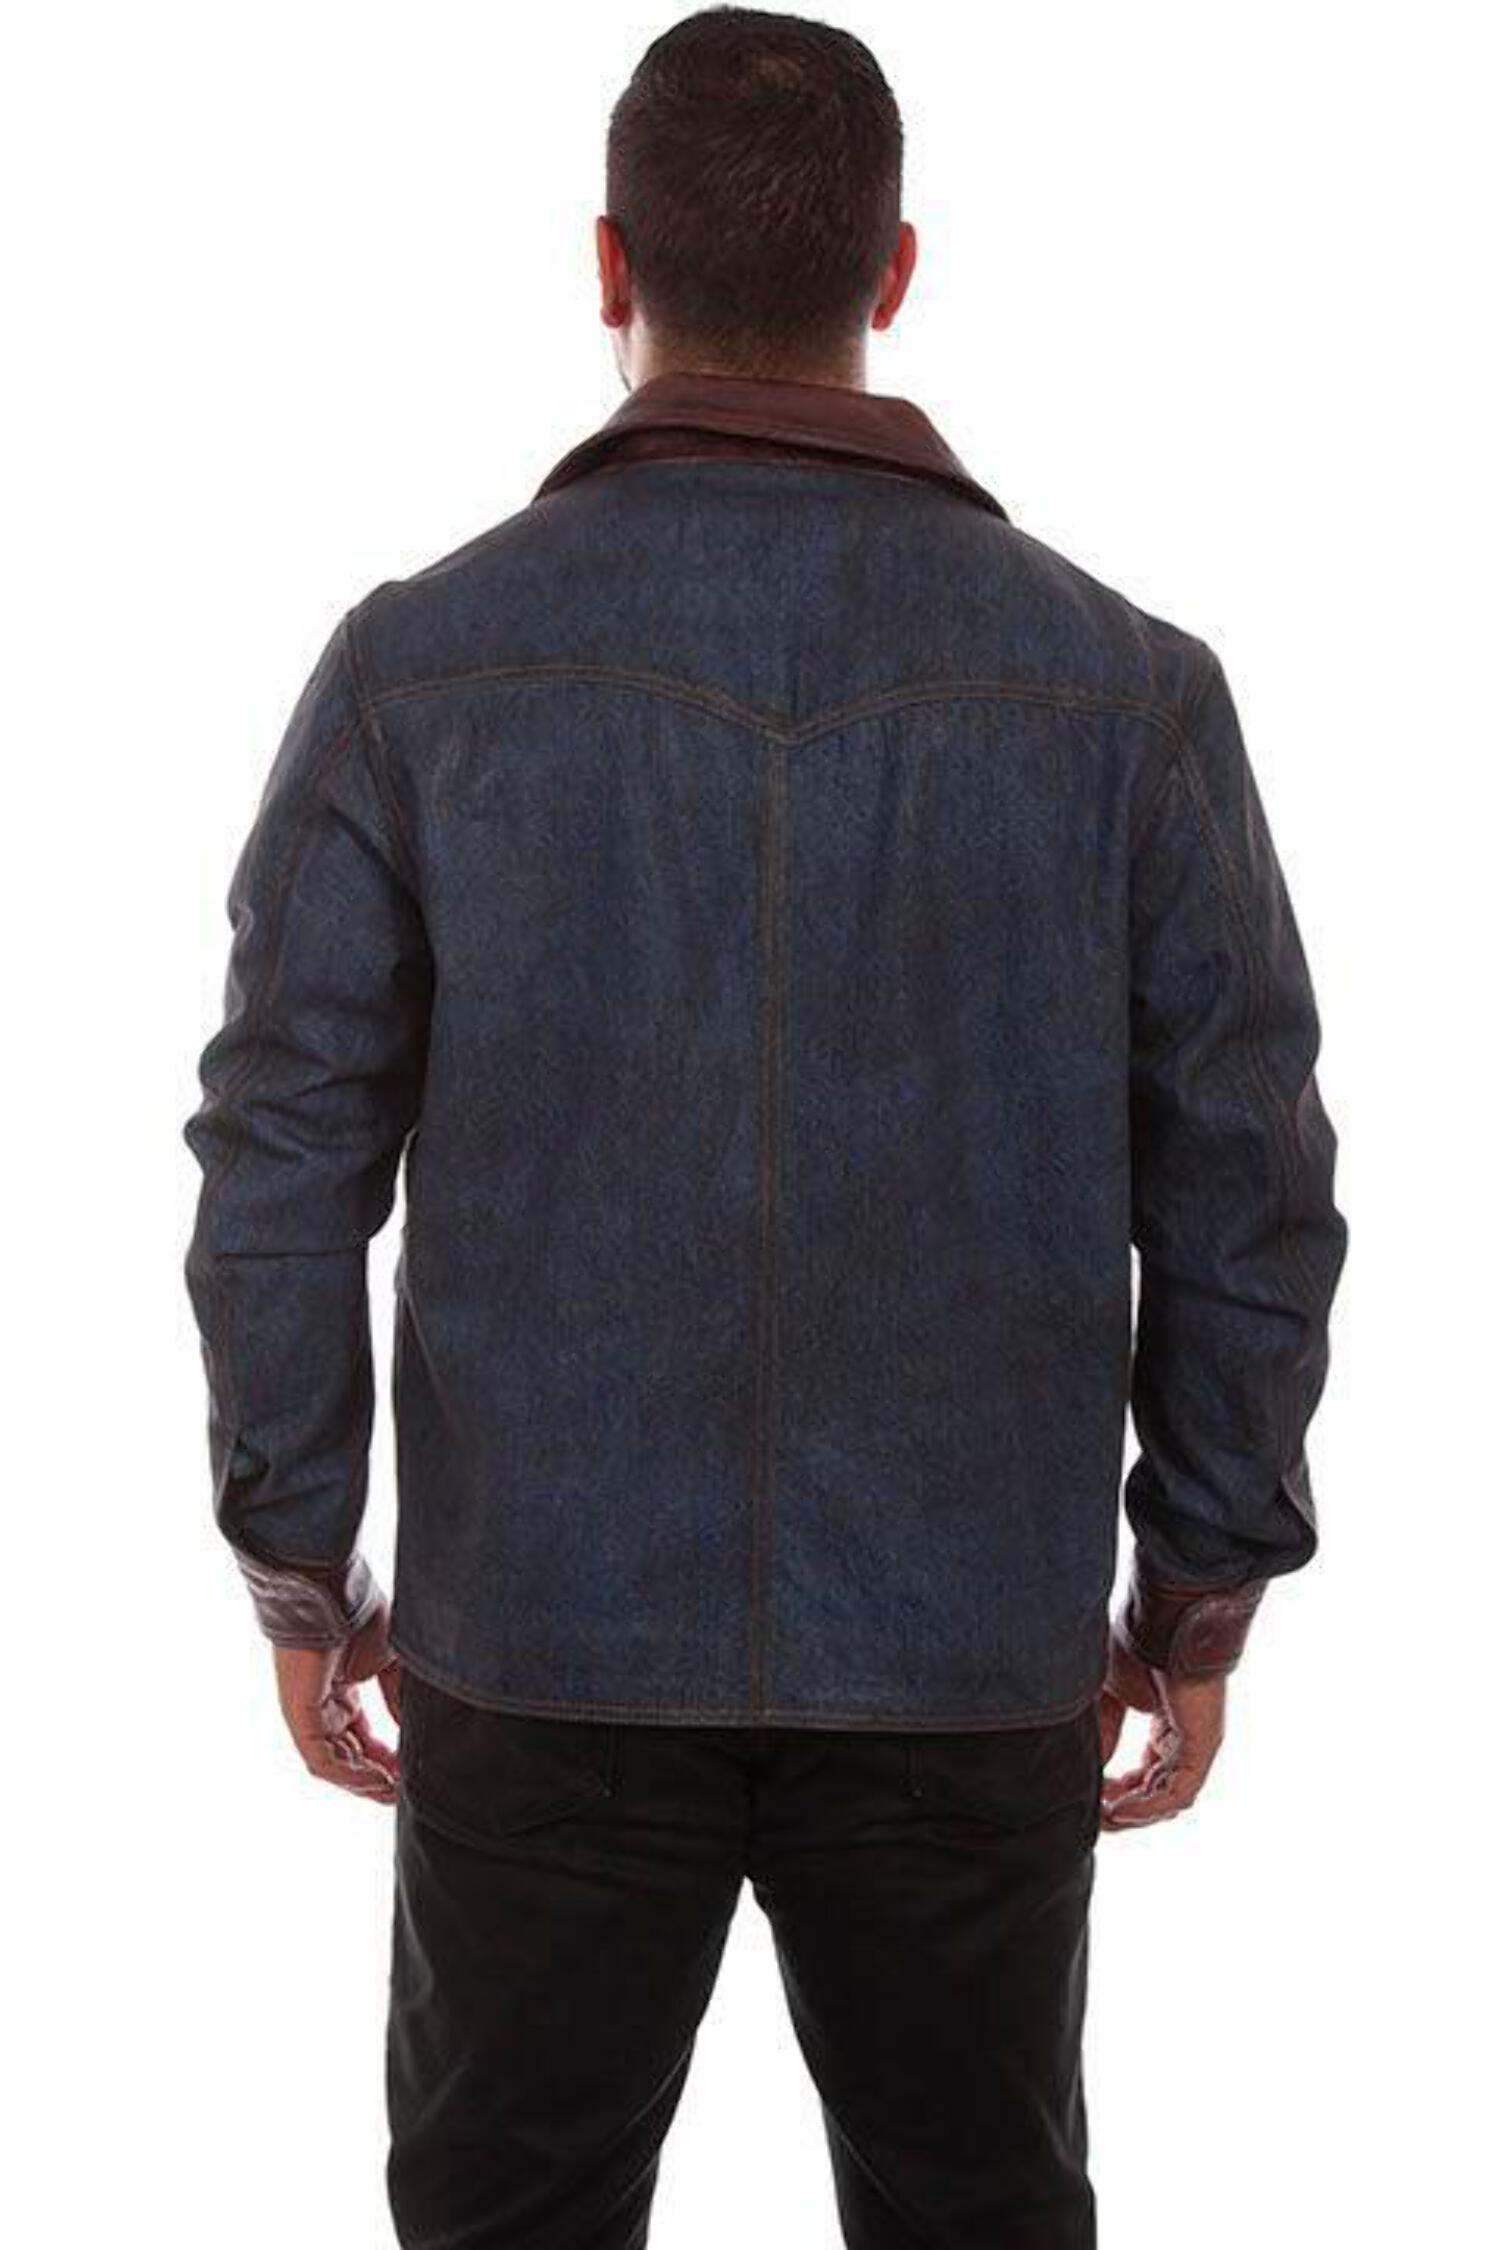 Scully 1068-193 XL Extra Large Denim & Leather Trim Jacket - image 2 of 2